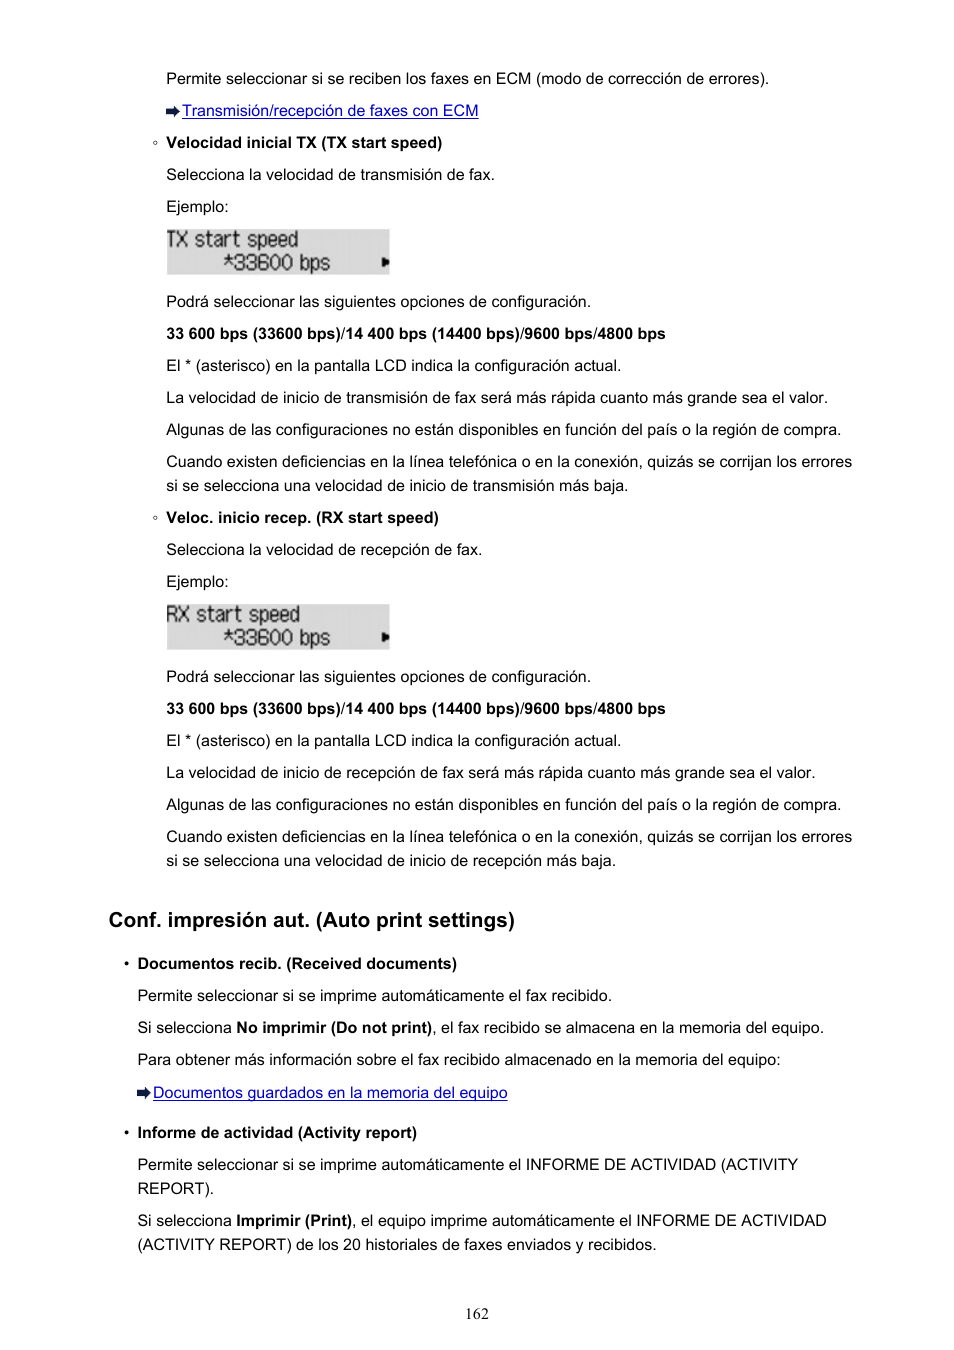 Conf. impresión aut. (auto print settings) | Canon PIXMA MX475 Manual del usuario | Página 162 / 973